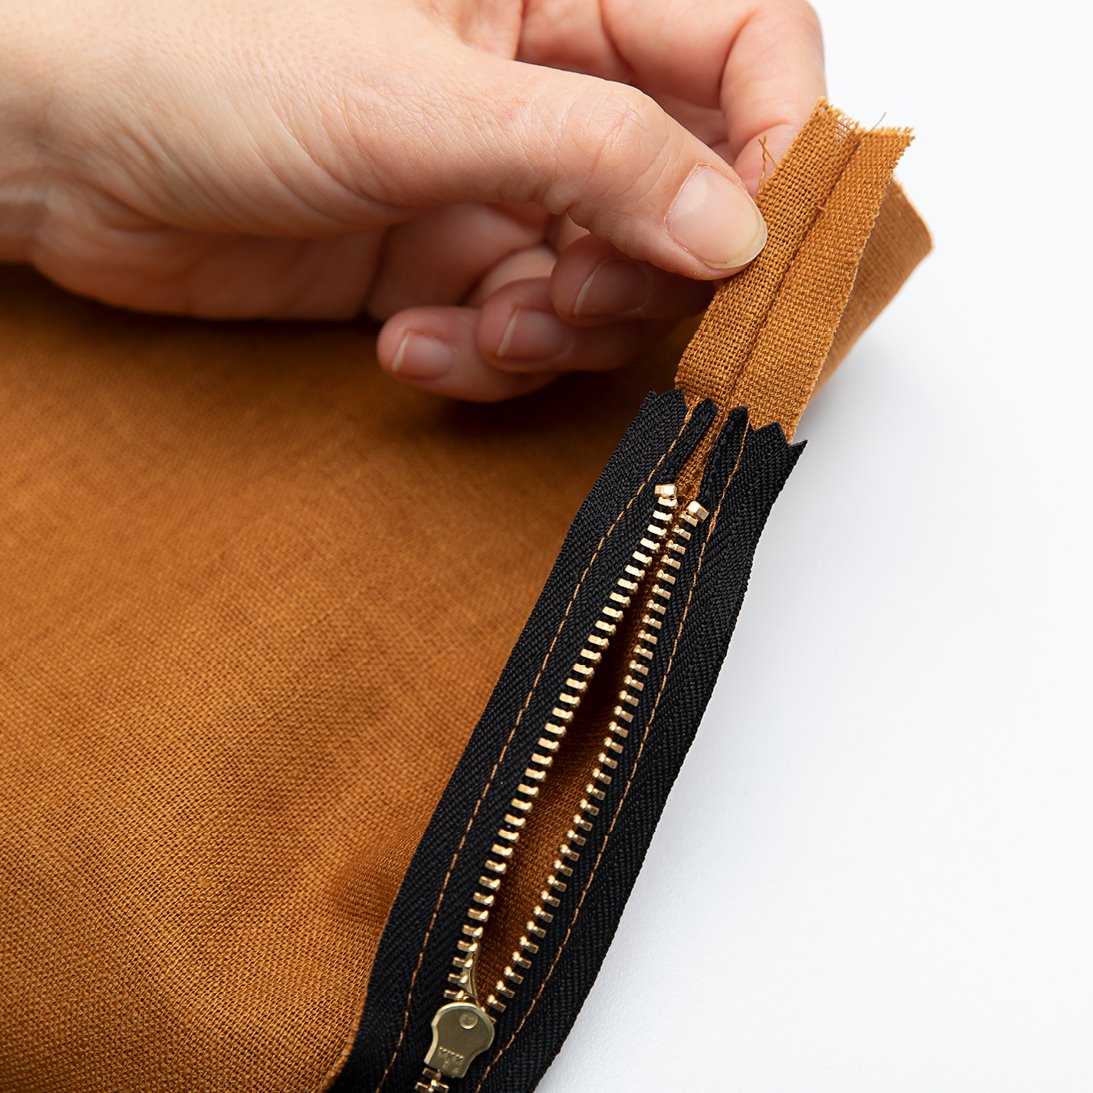 How to sew a zipper Diy8009-step5.jpg